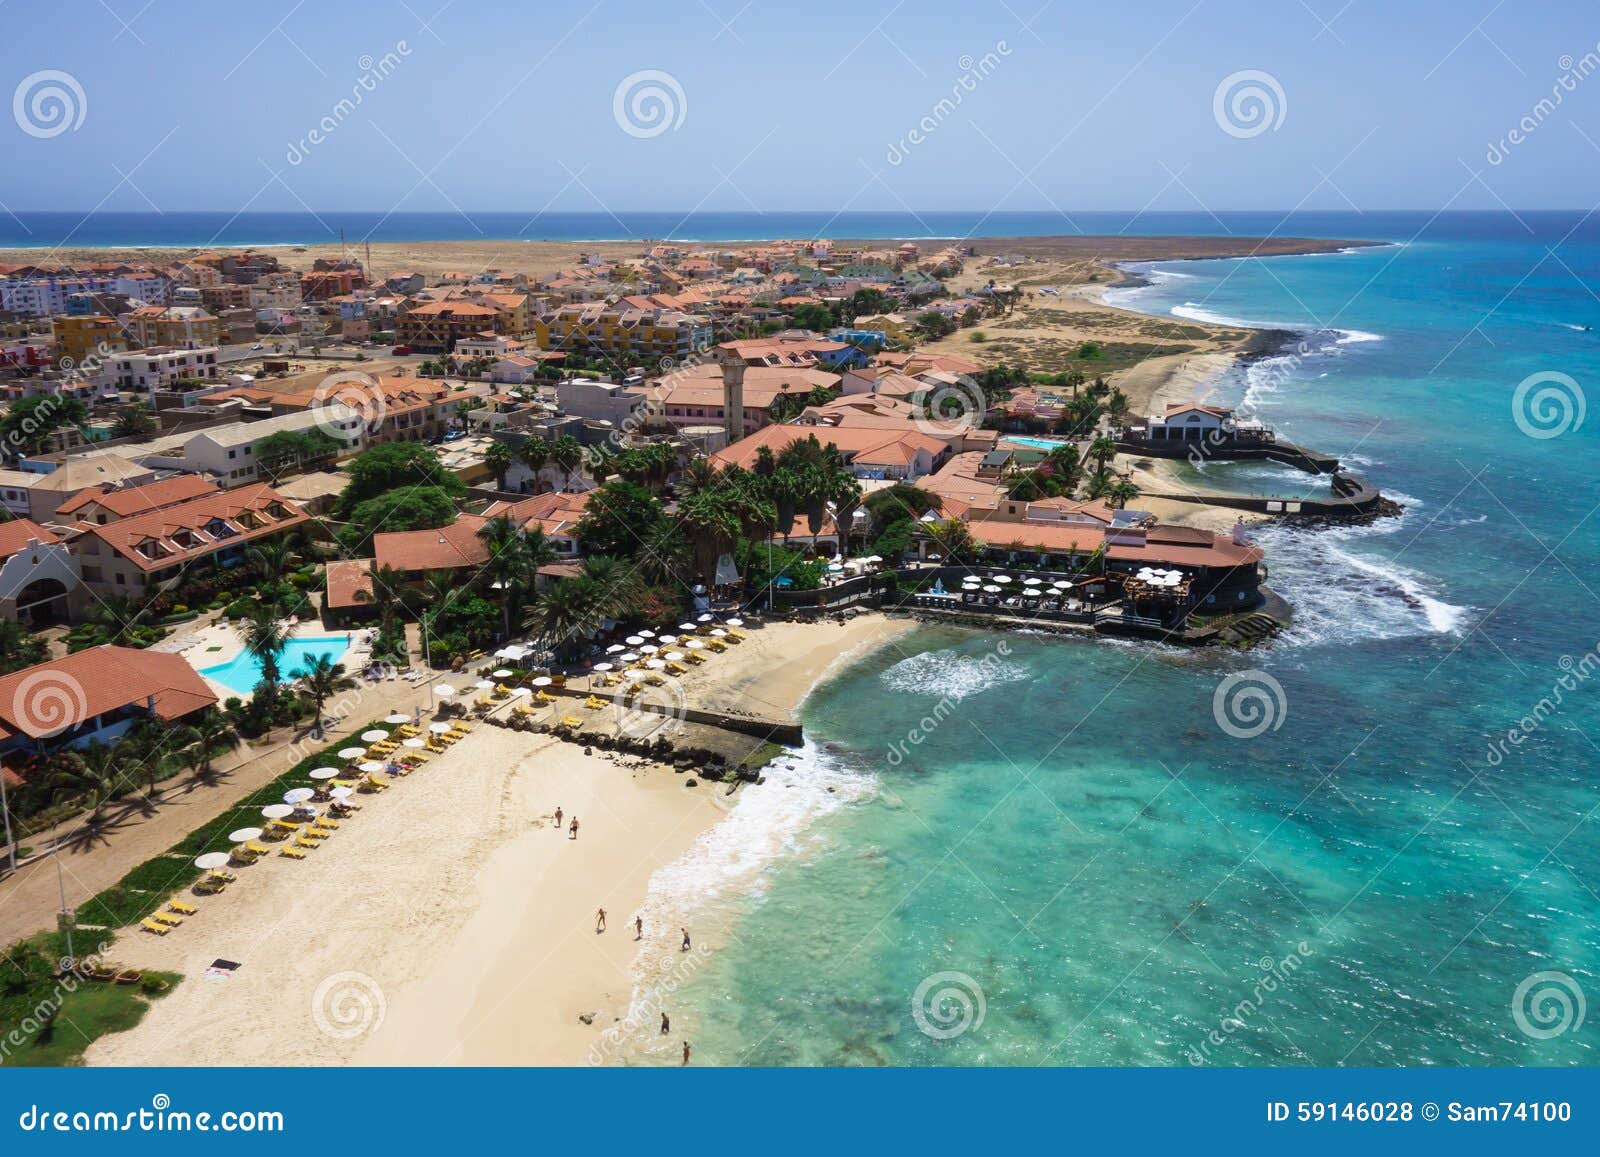 Aerial View Santa Maria Beach in Sal Island - Cabo Stock Photo - Image of archipelago, sotavento: 59146028